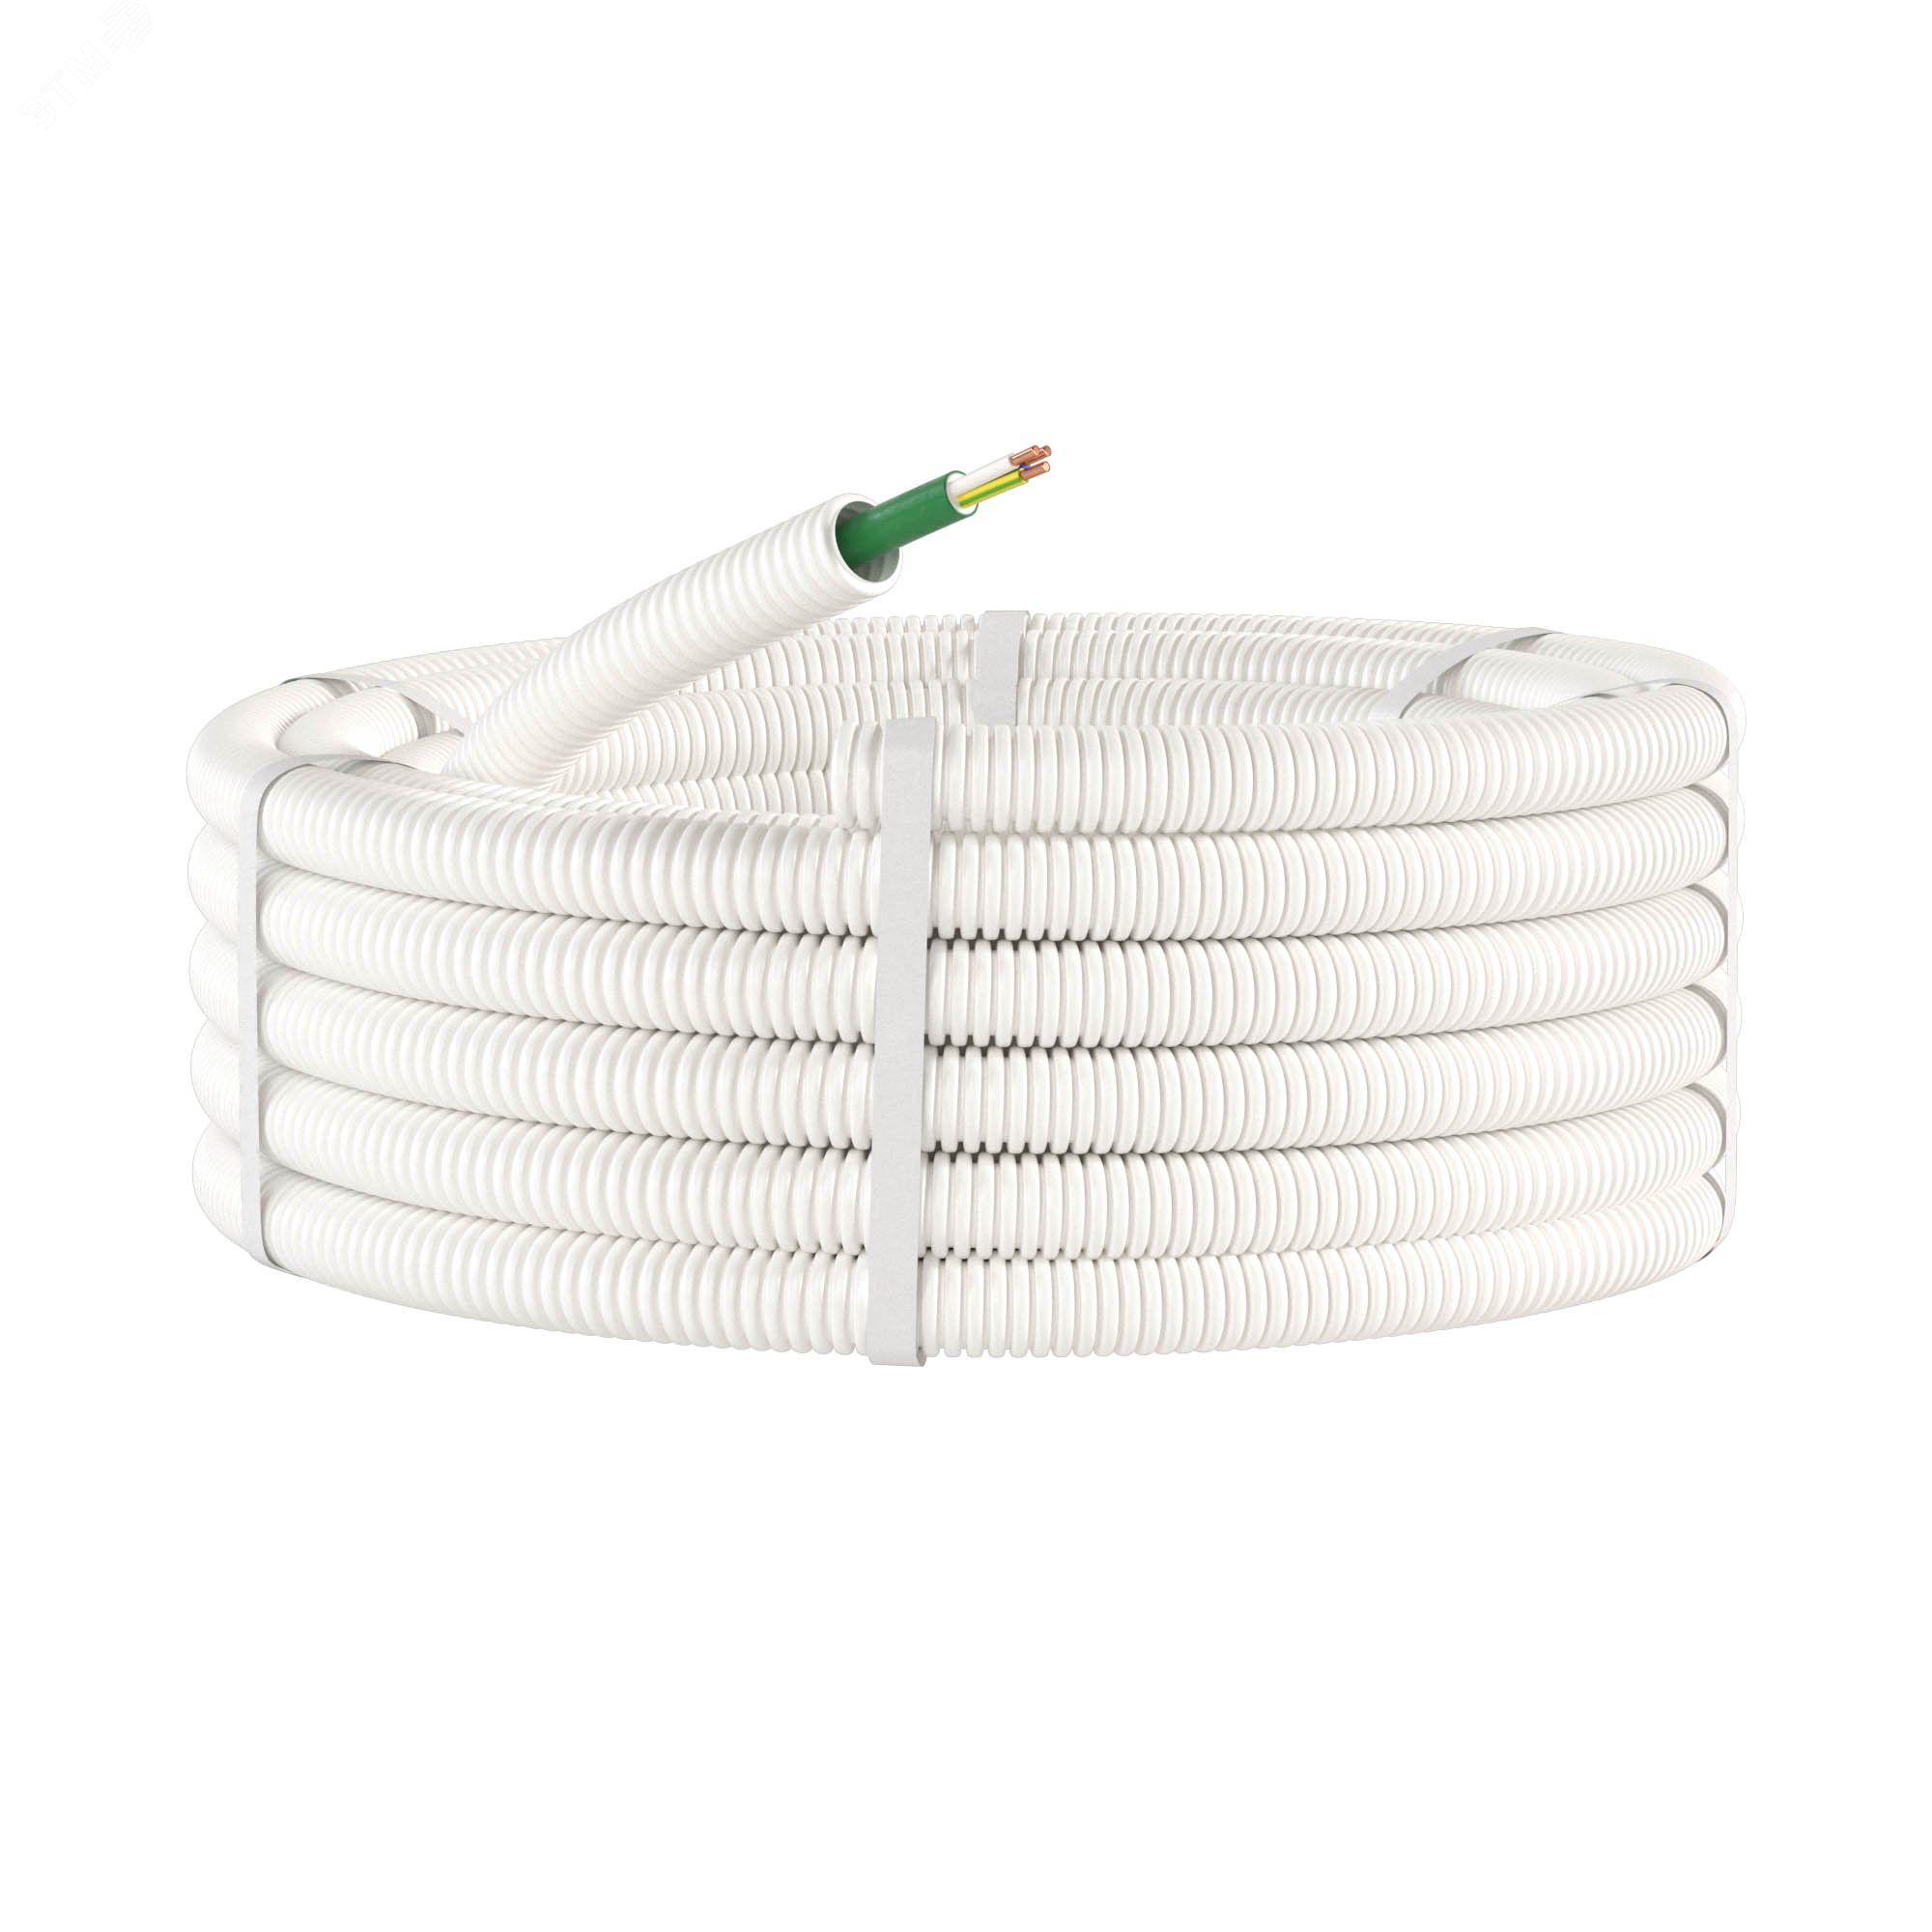 Электротруба ПЛЛ гибкая гофр не содержит галогеновд.25мм цвет белый с кабелем ППГнг(А)-FRHF 3x1,5мм РЭК ГОСТ+,50м 8L82550FRHF DKC - превью 3